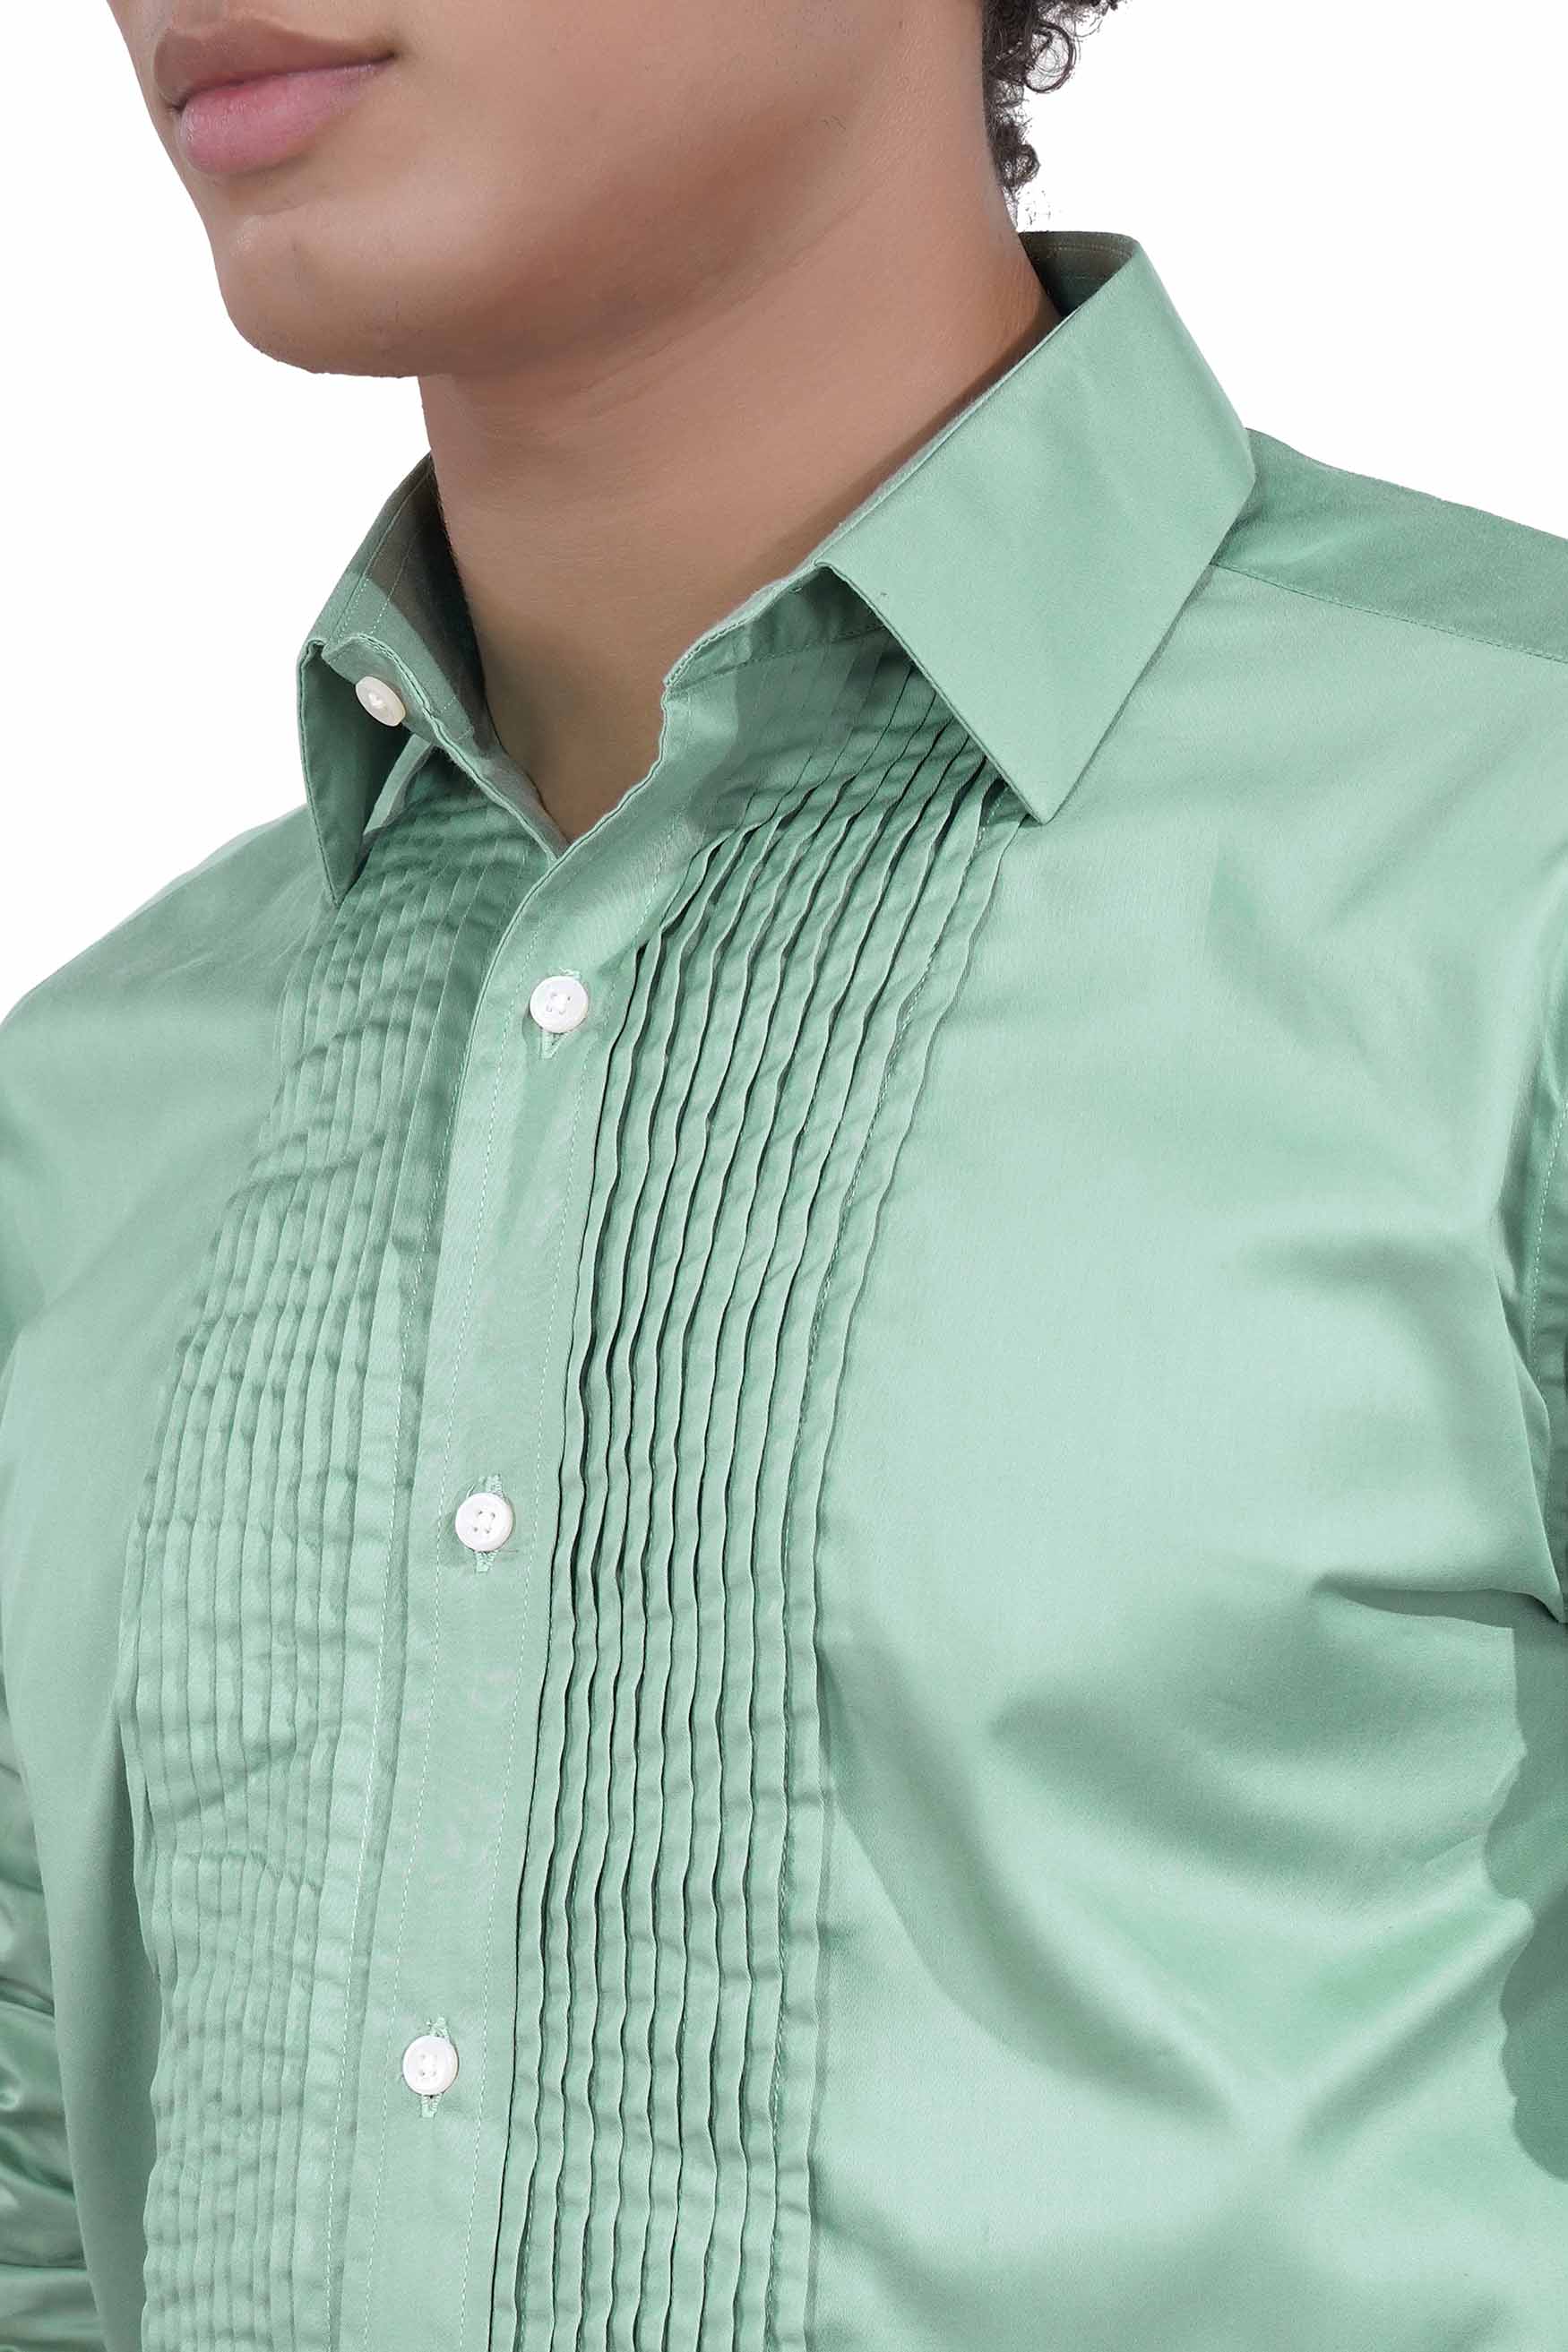 Gulf Stream Green Subtle Sheen Super Soft Premium Cotton Tuxedo Shirt